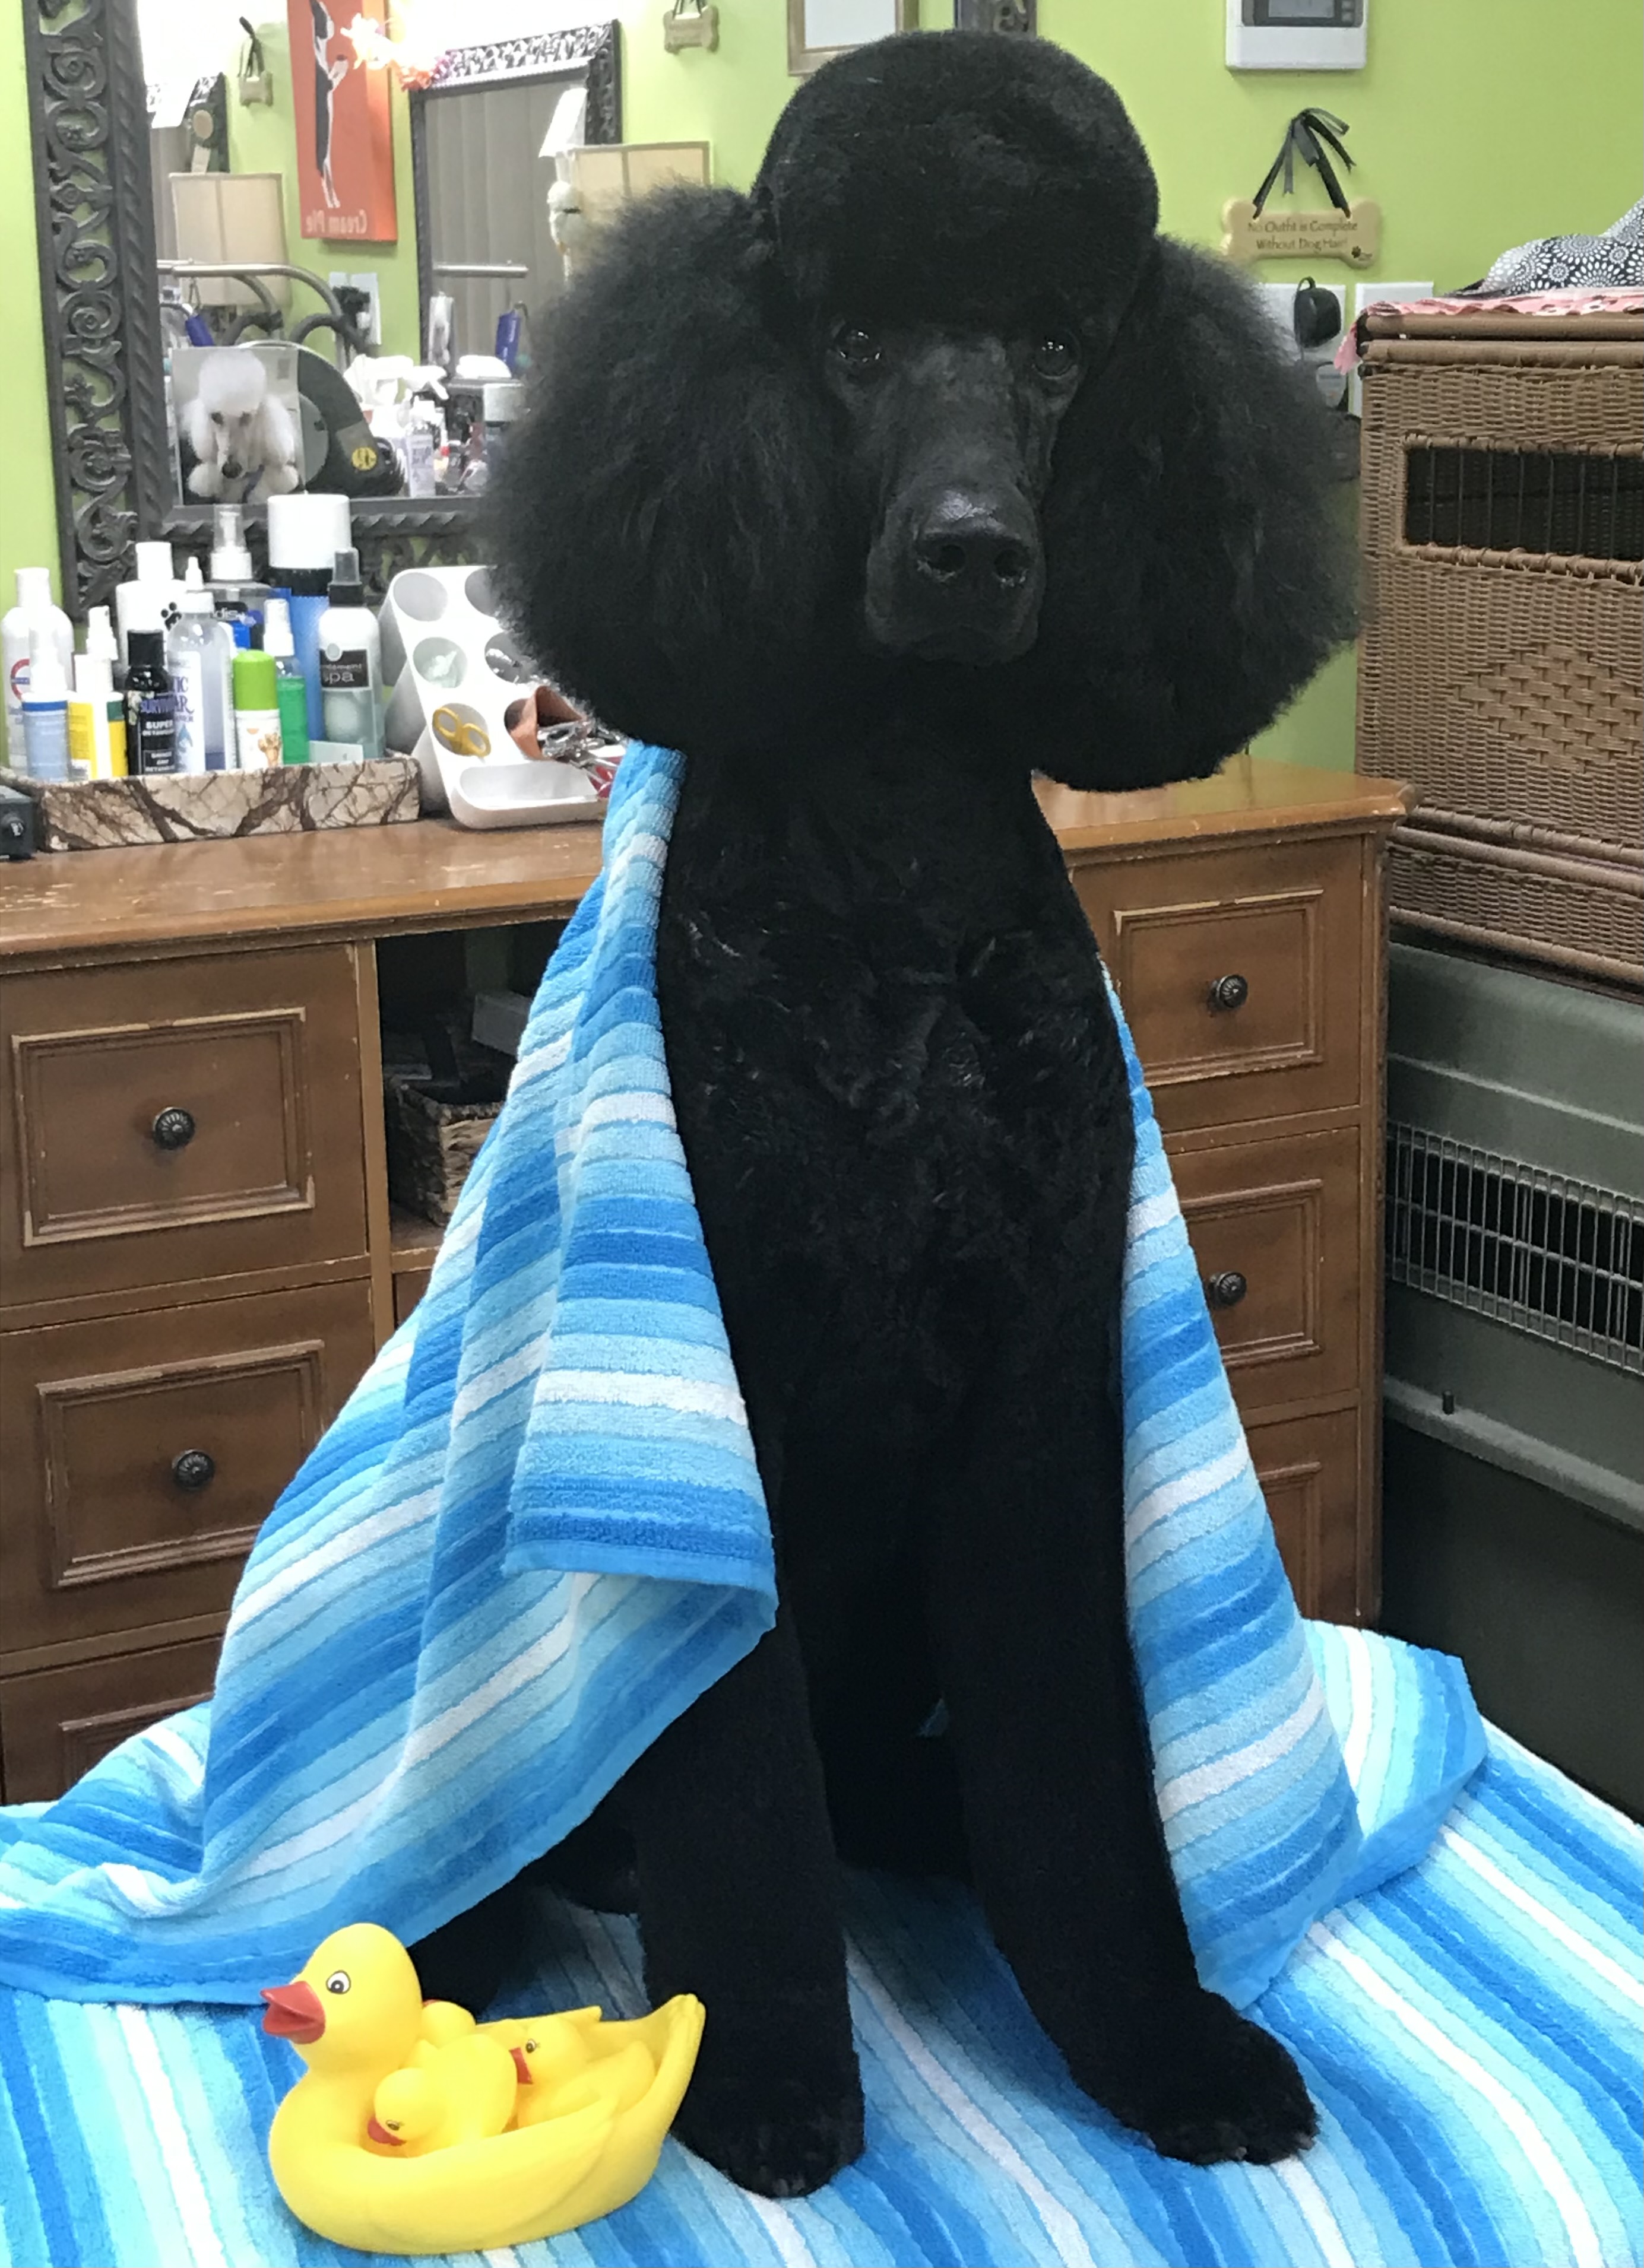 Black Poodle in a Towel